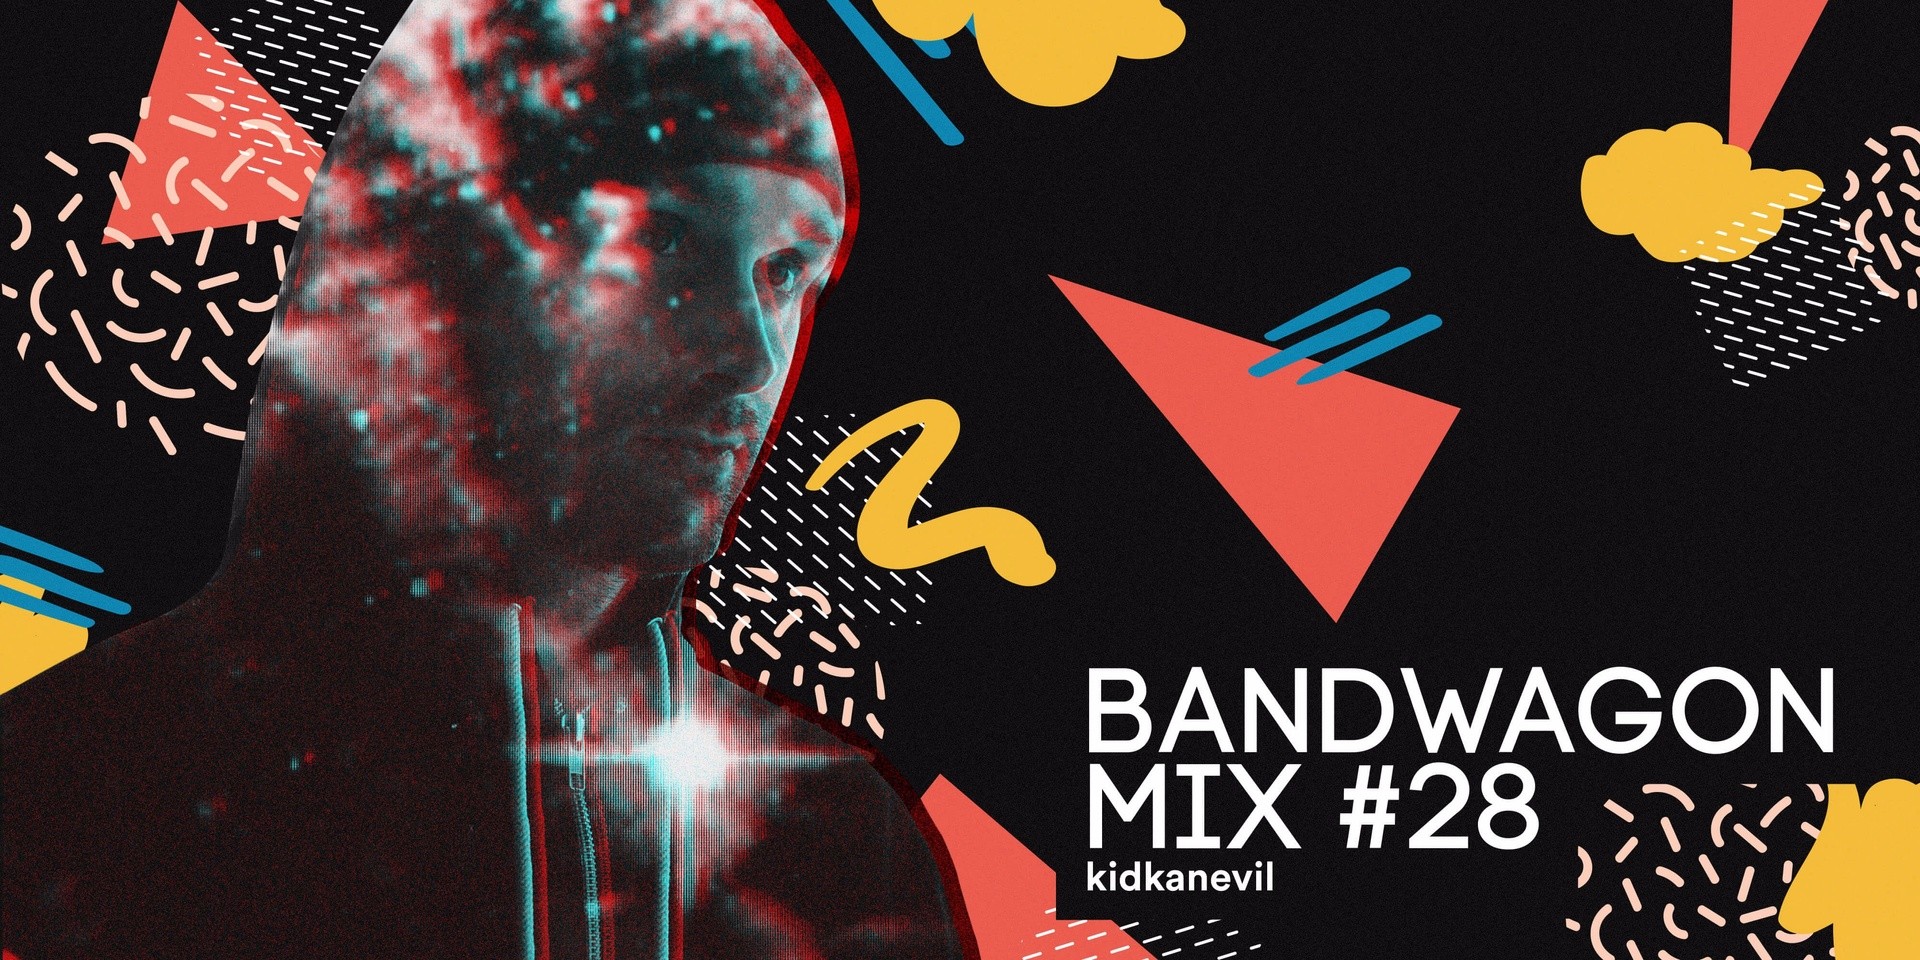 Bandwagon Mix #28: kidkanevil 